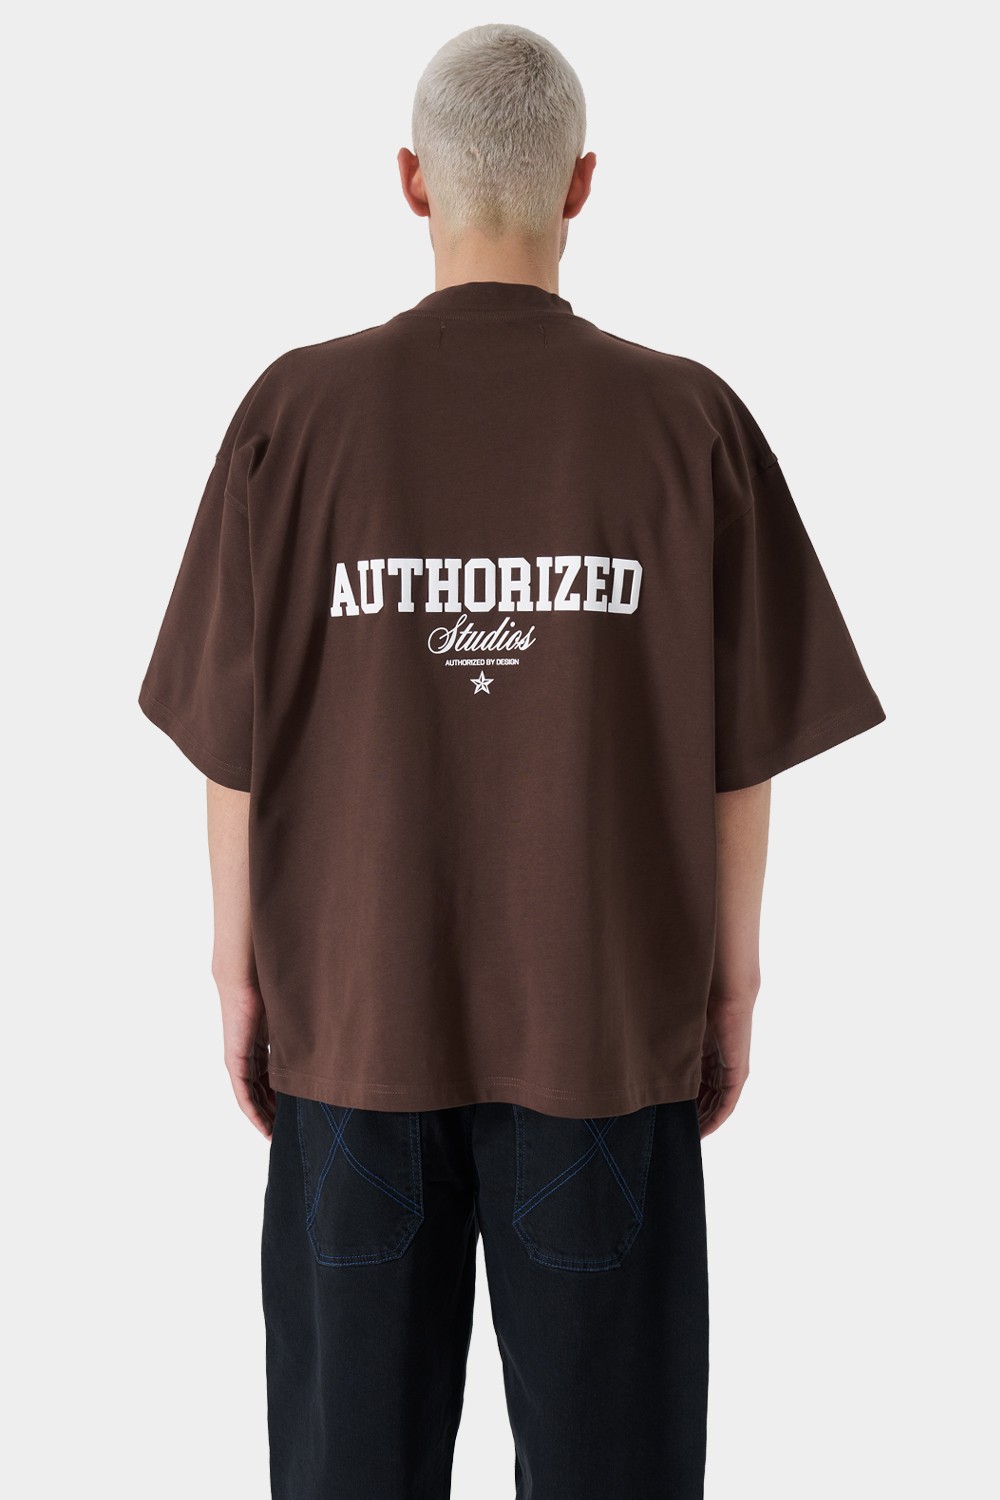 Authorized Studio Graphic T-Shirt (ATH-3)